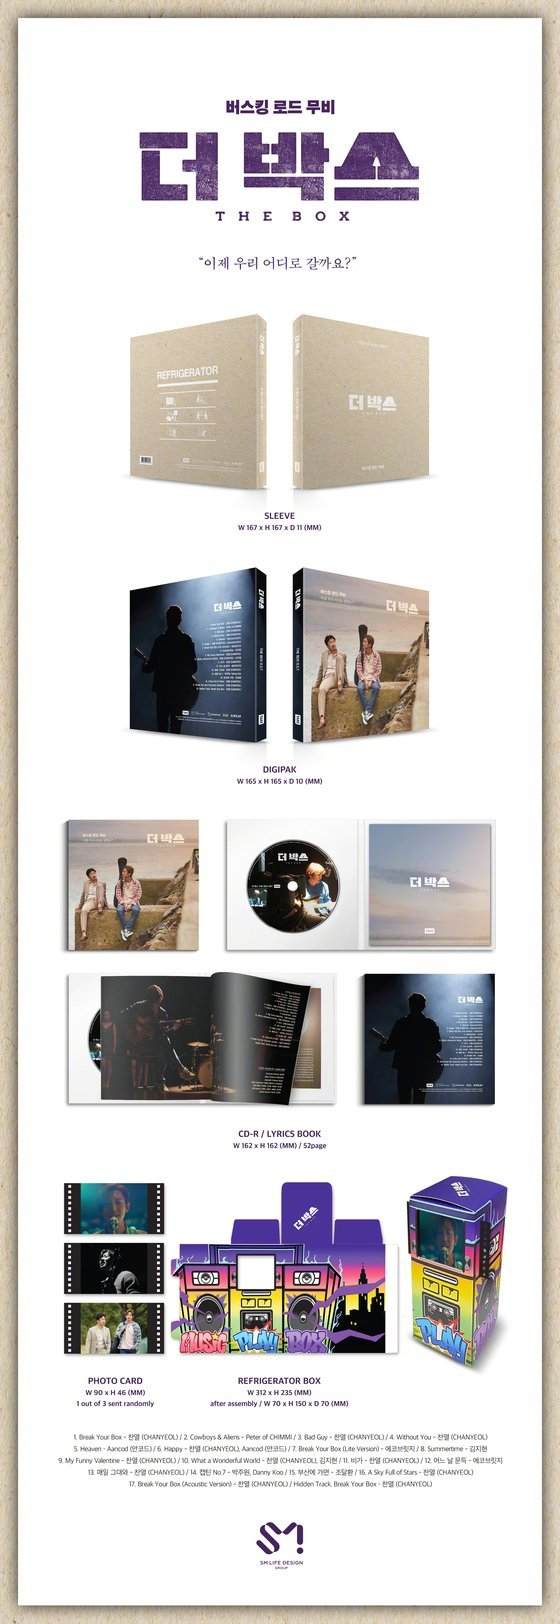 THE BOX OST - Album [THE BOX OST] (Trak list : CHANYEOL